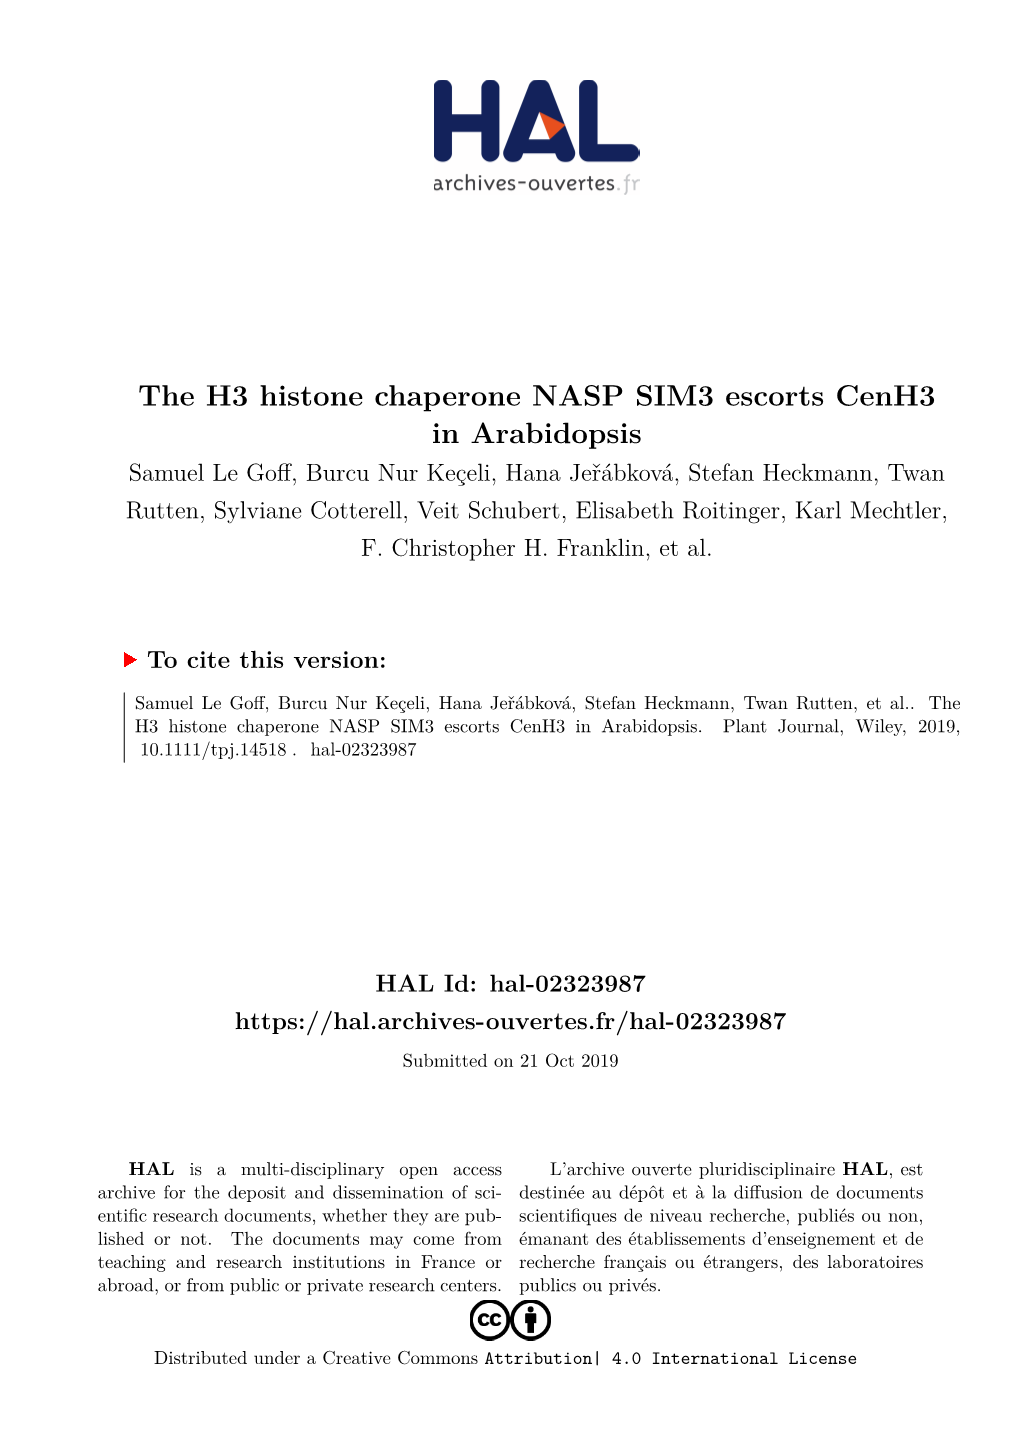 The H3 Histone Chaperone NASP SIM3 Escorts Cenh3 in Arabidopsis